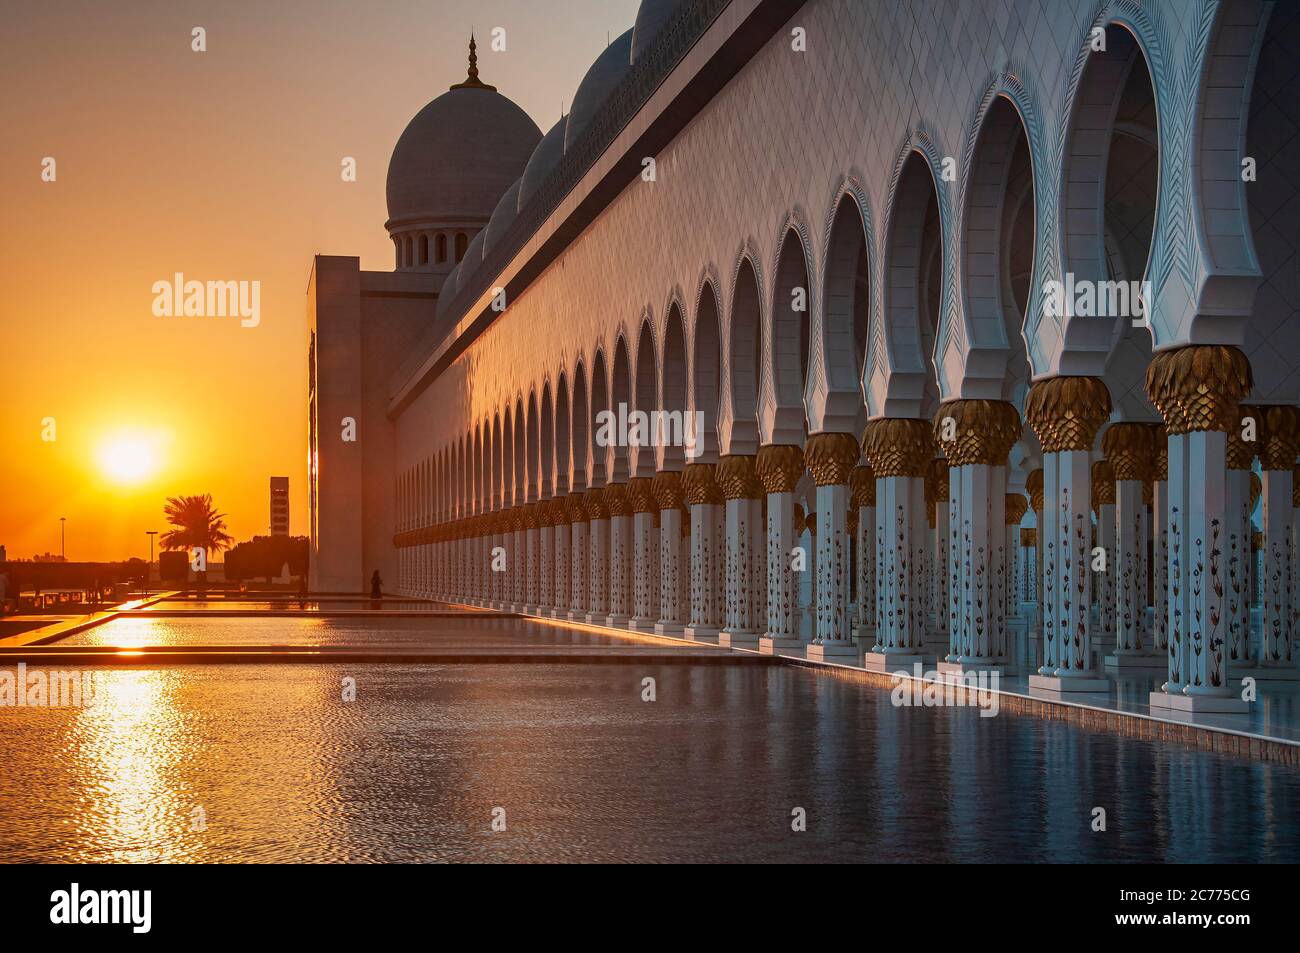 The Sheikh Zayed Grand Mosque at sunset, Abu Dhabi, United Arab Emirates, Middle East Stock Photo